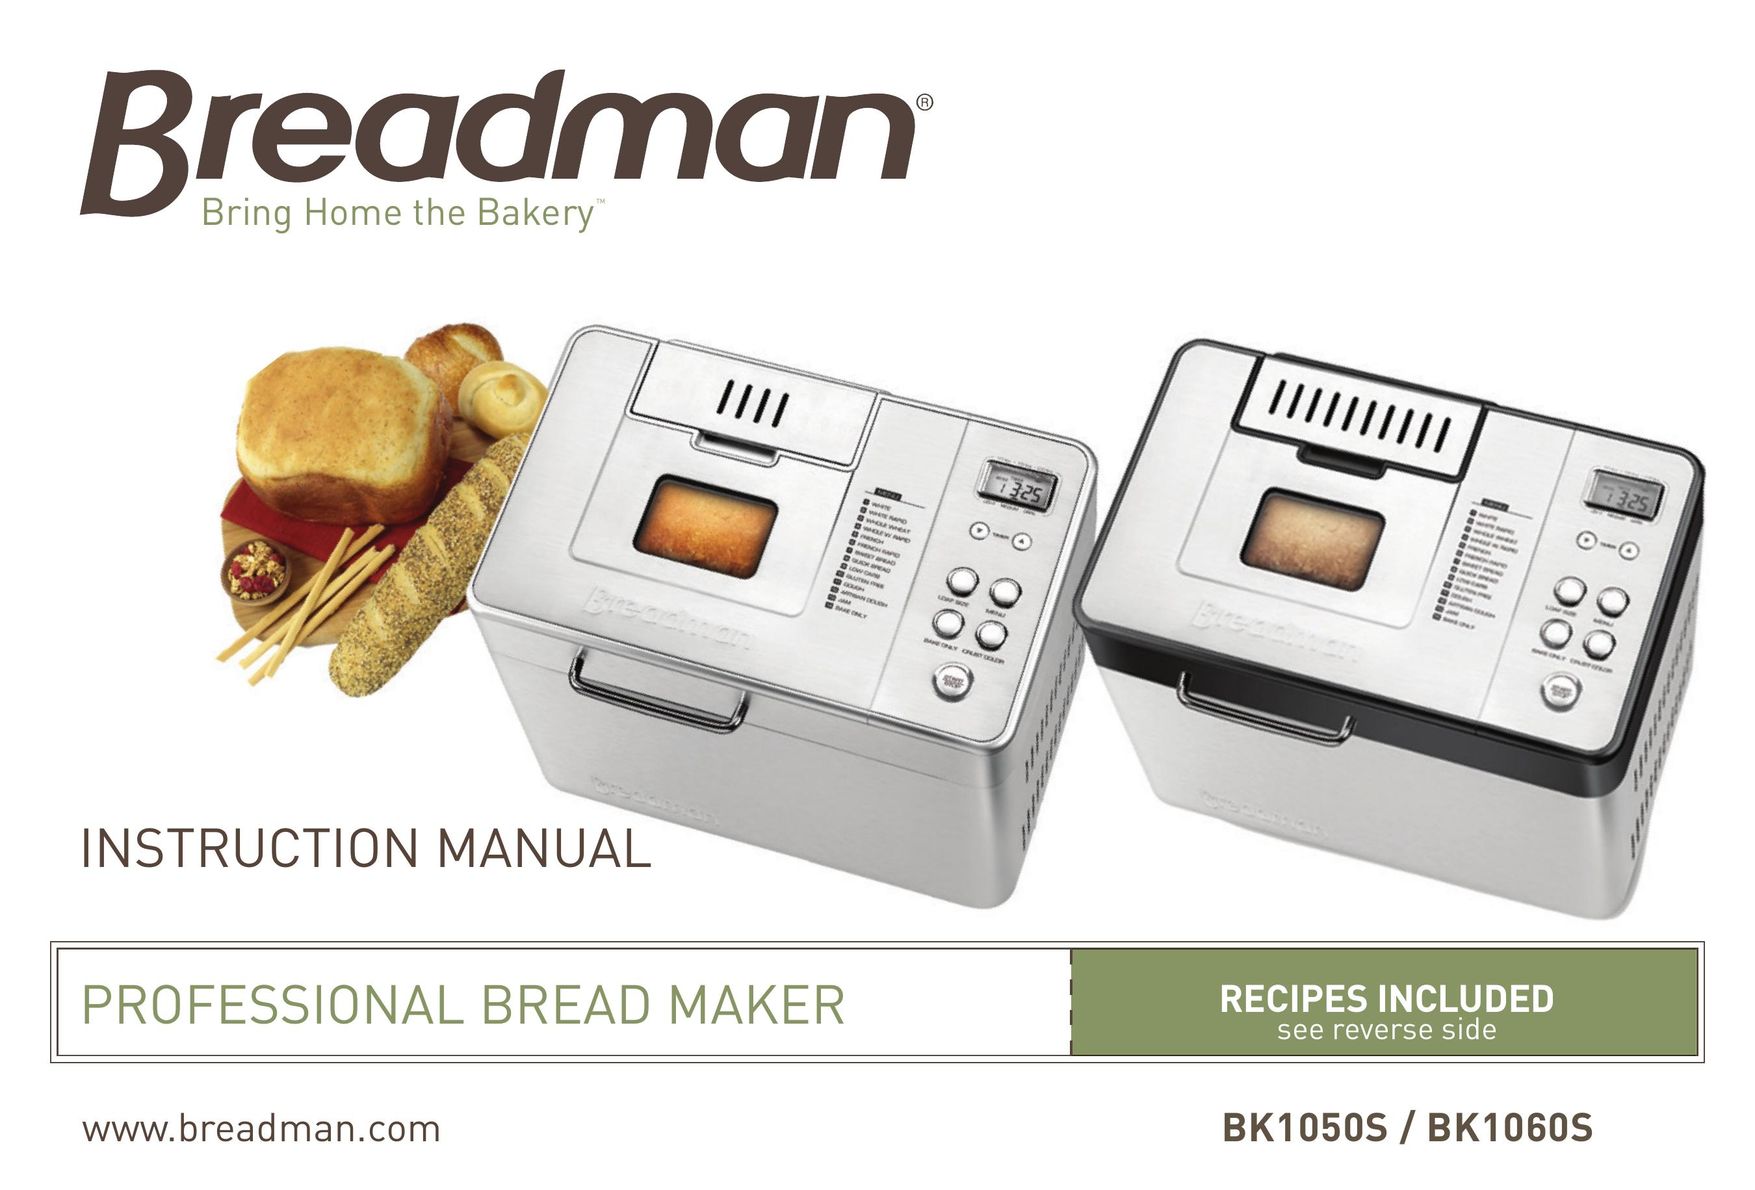 Breadman BK1060S Bread Maker User Manual